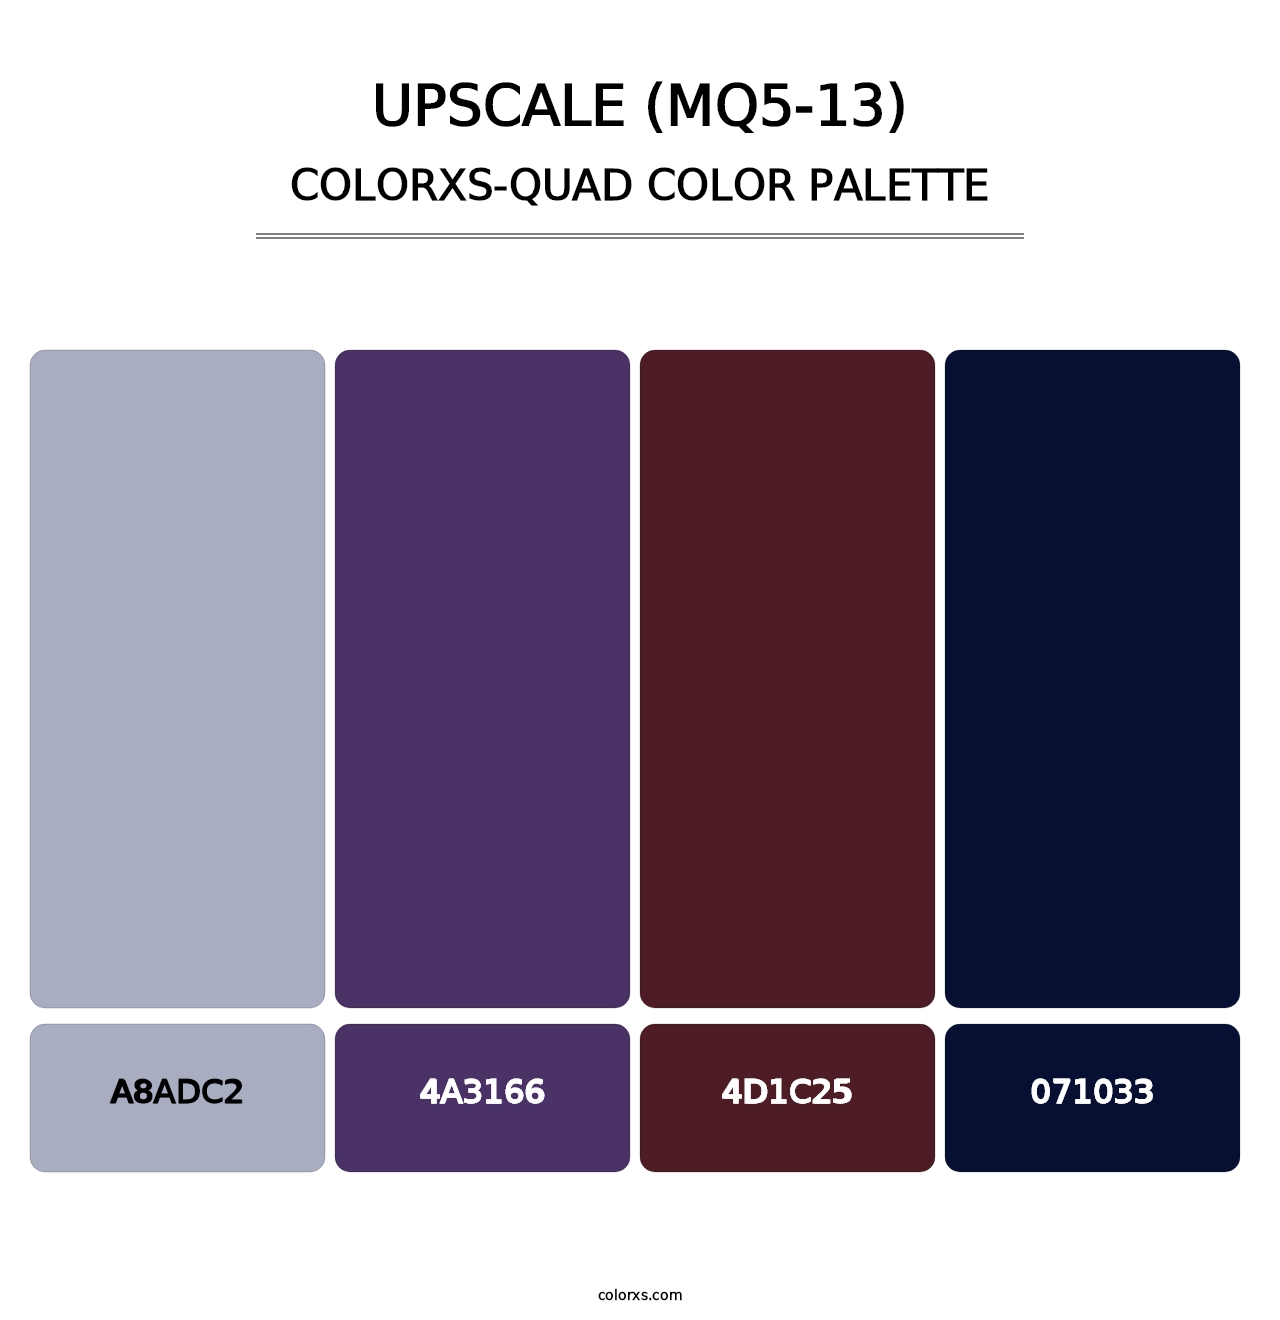 Upscale (MQ5-13) - Colorxs Quad Palette